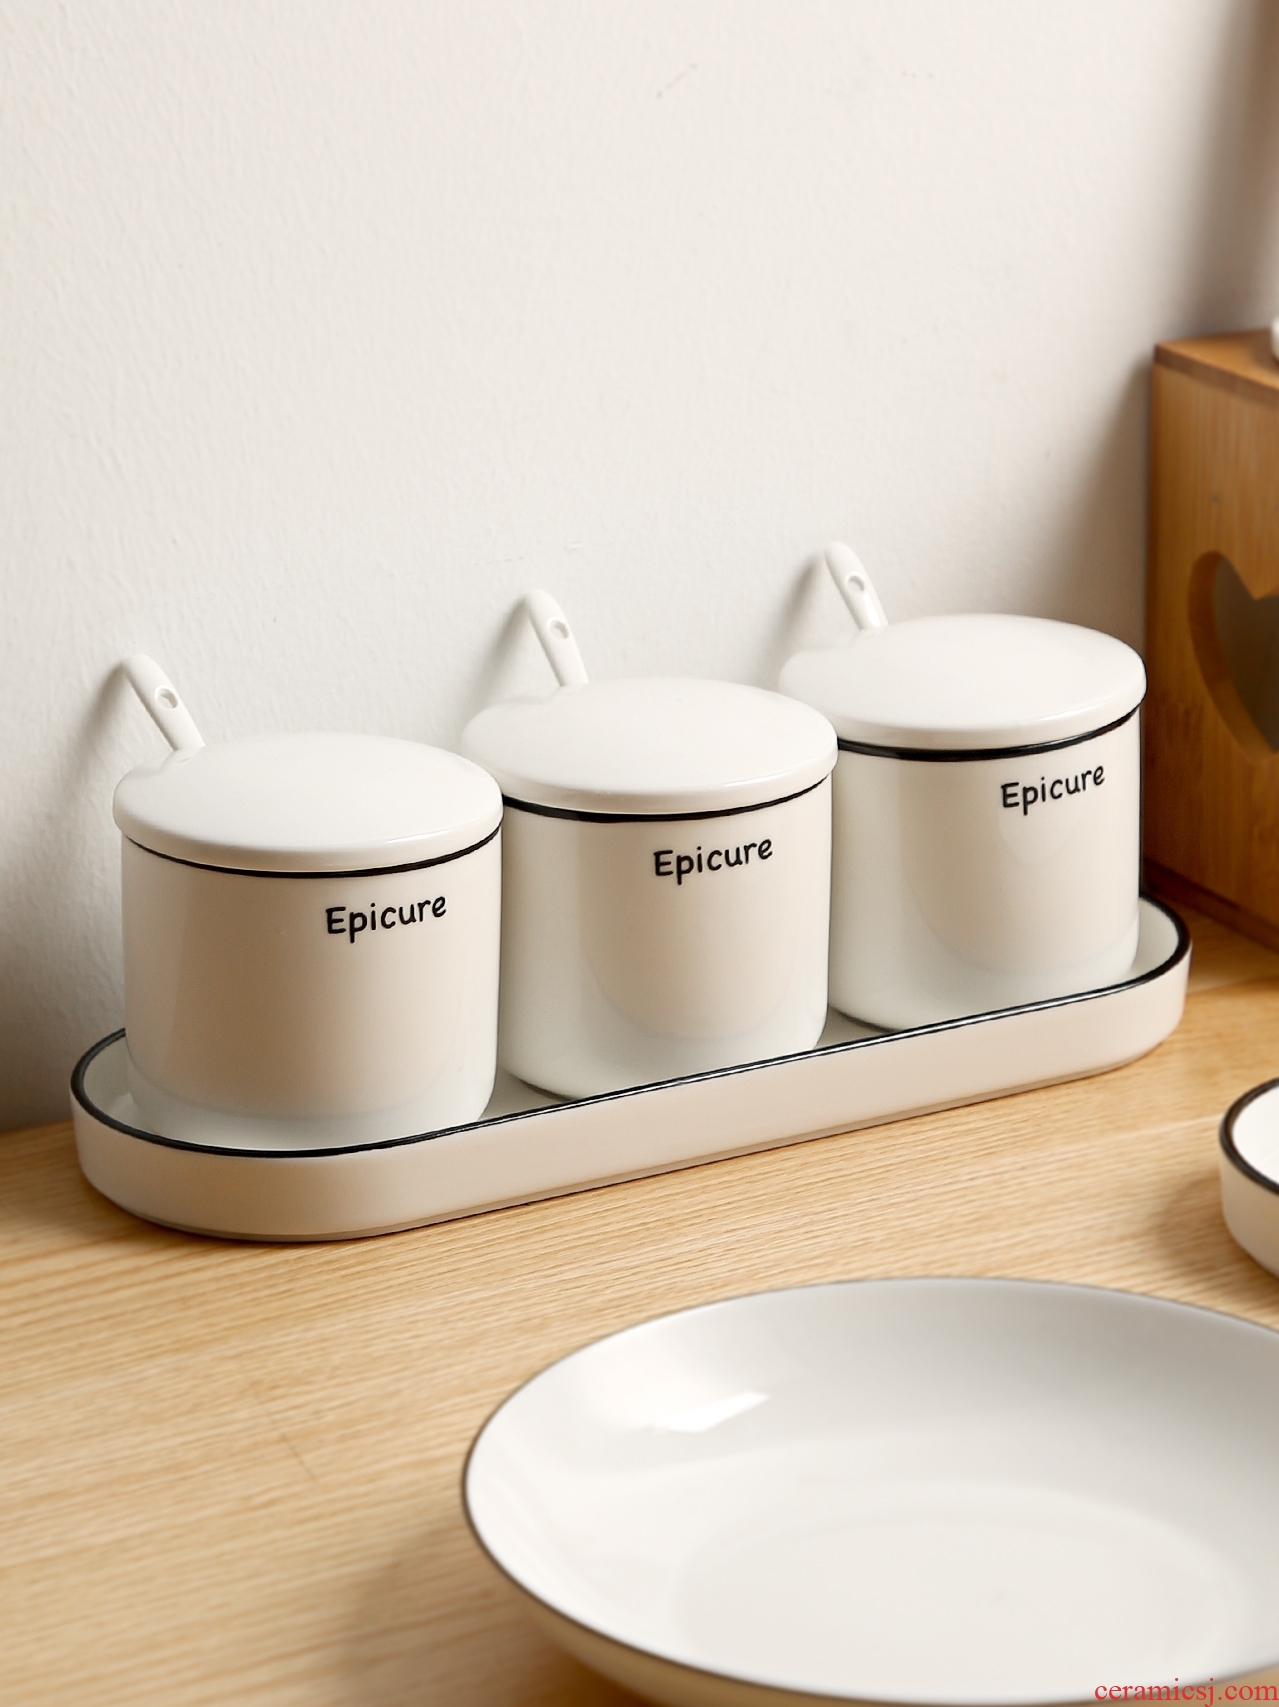 Inky ceramic seasoning jar of kitchen household Nordic three-piece, cooking pot seasoning boxed set combination